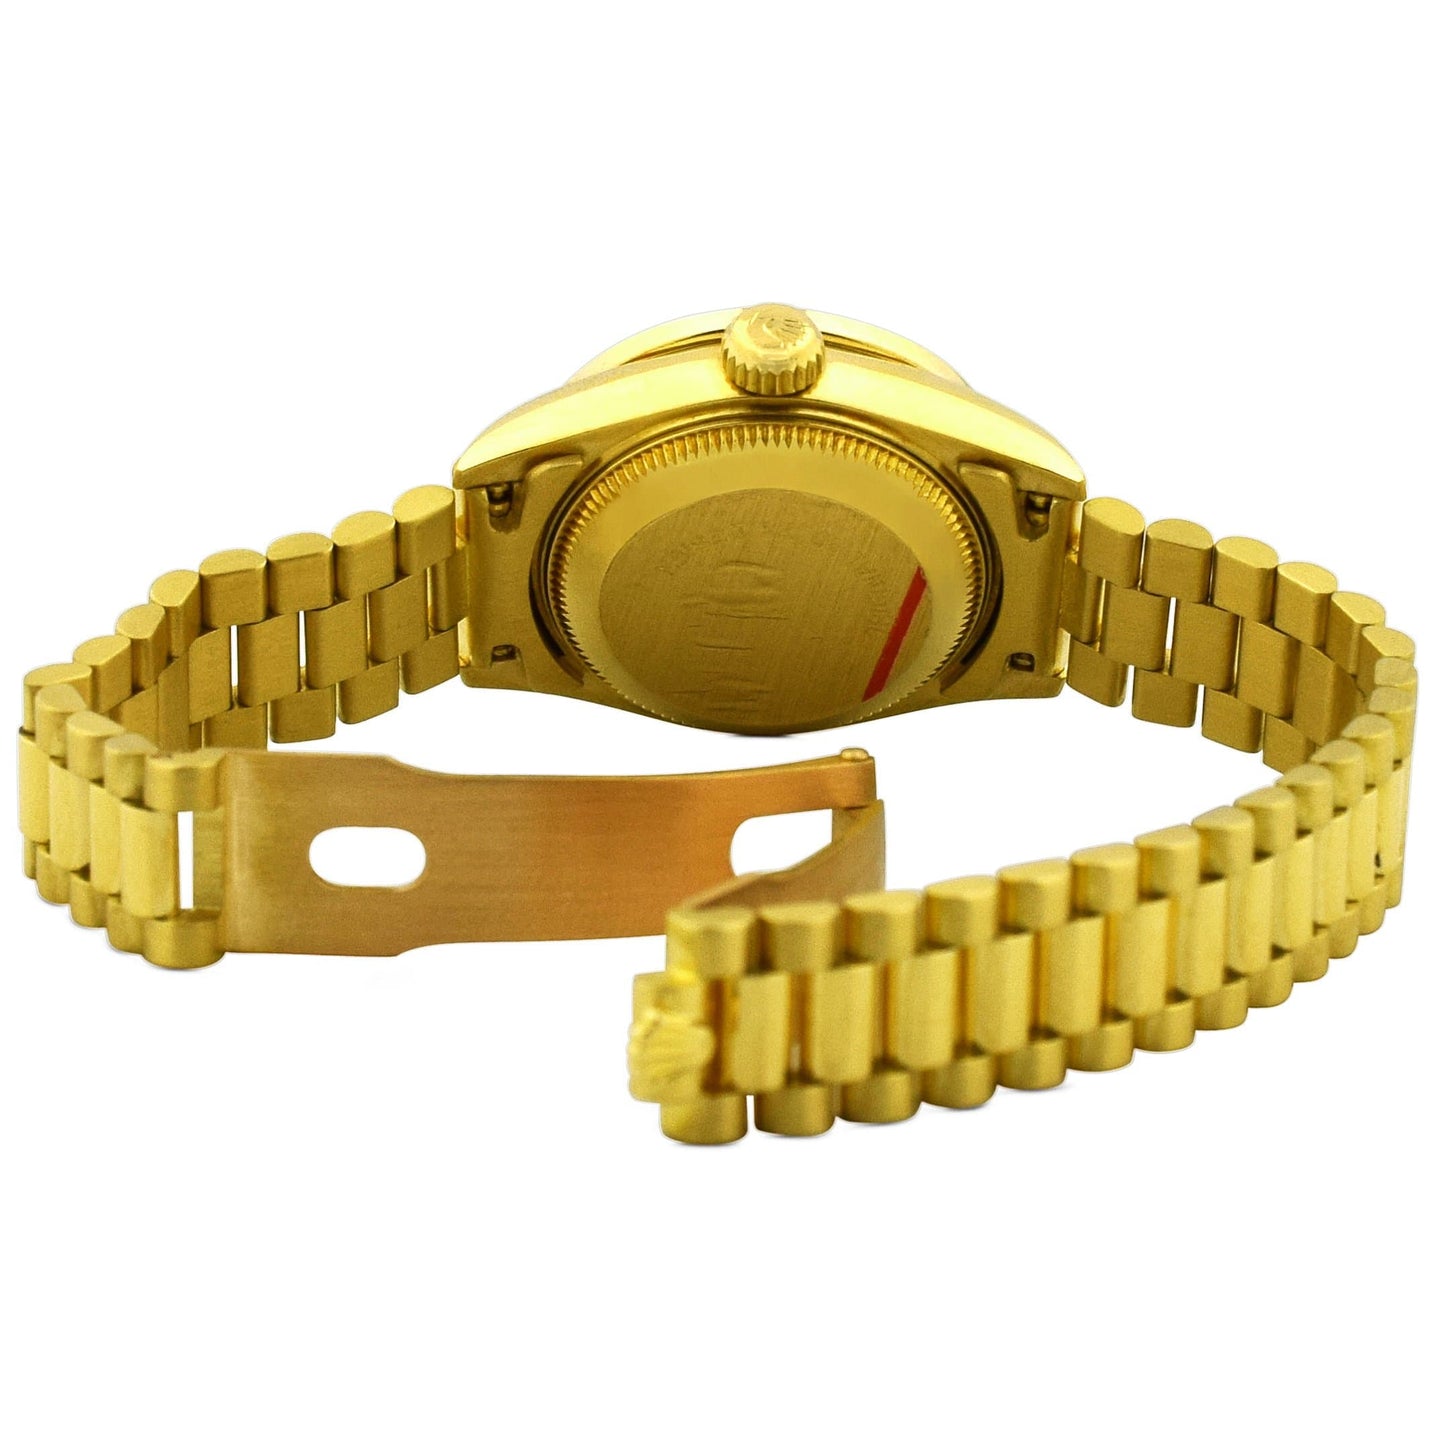 Rolex Datejust Yellow Gold 26mm White MOP Diamond Dial Watch Ref# 69178 - Happy Jewelers Fine Jewelry Lifetime Warranty